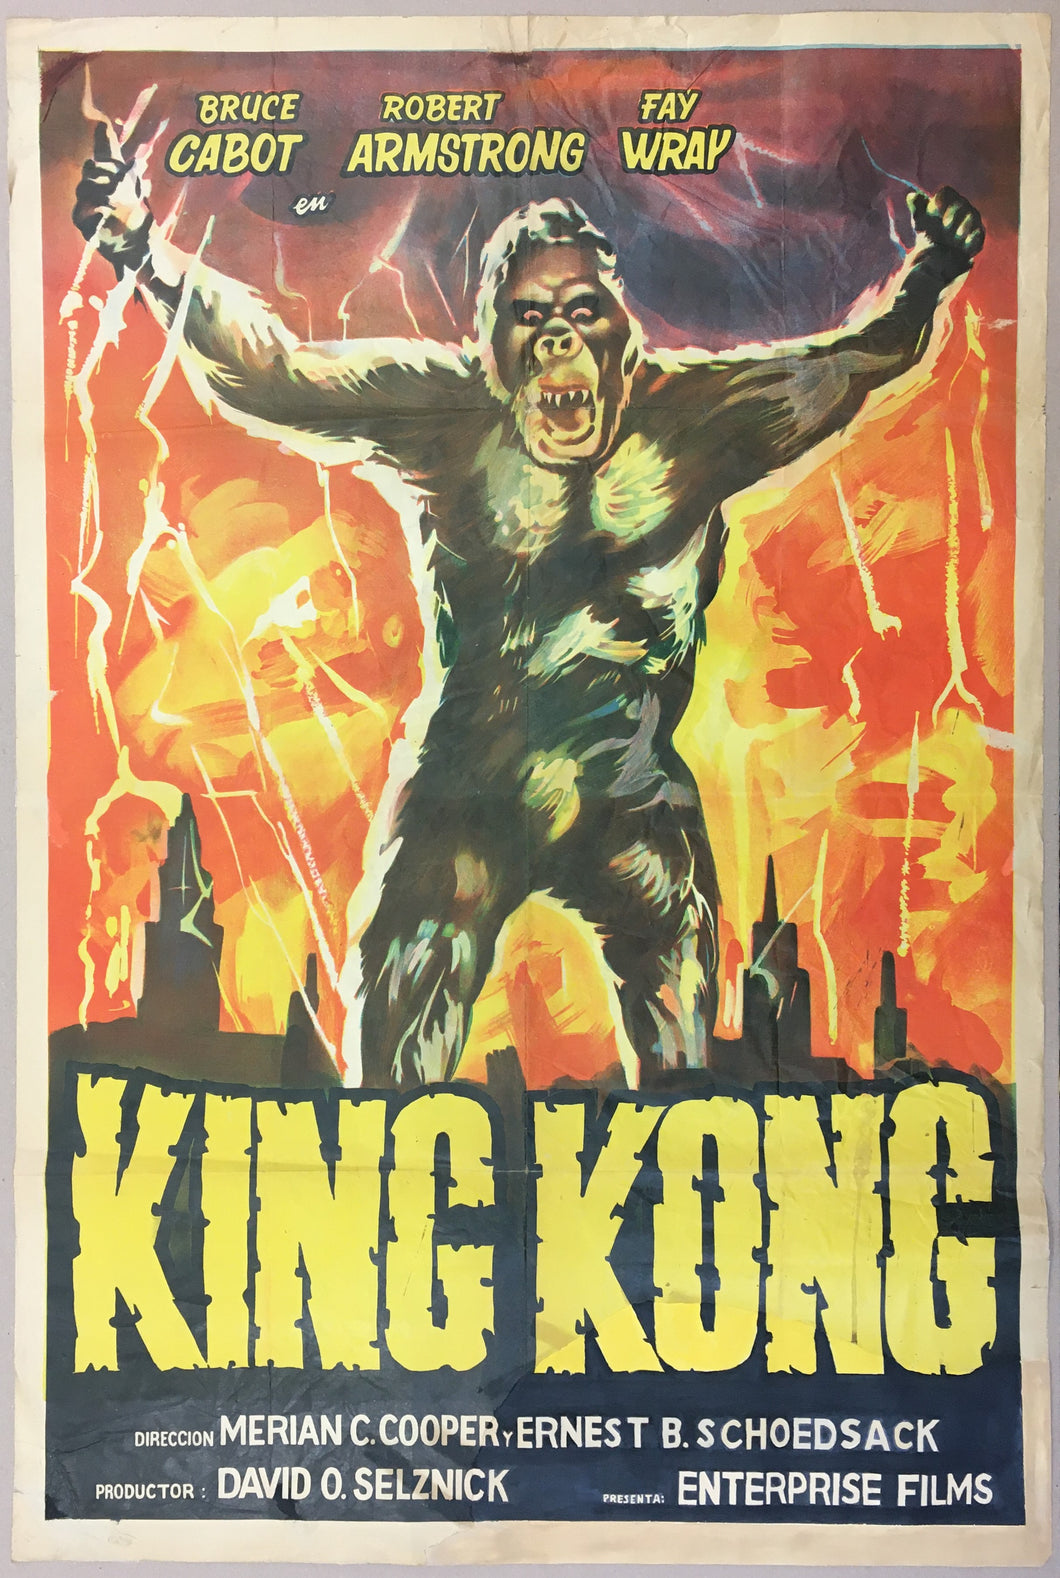 Unattributed  “King Kong”